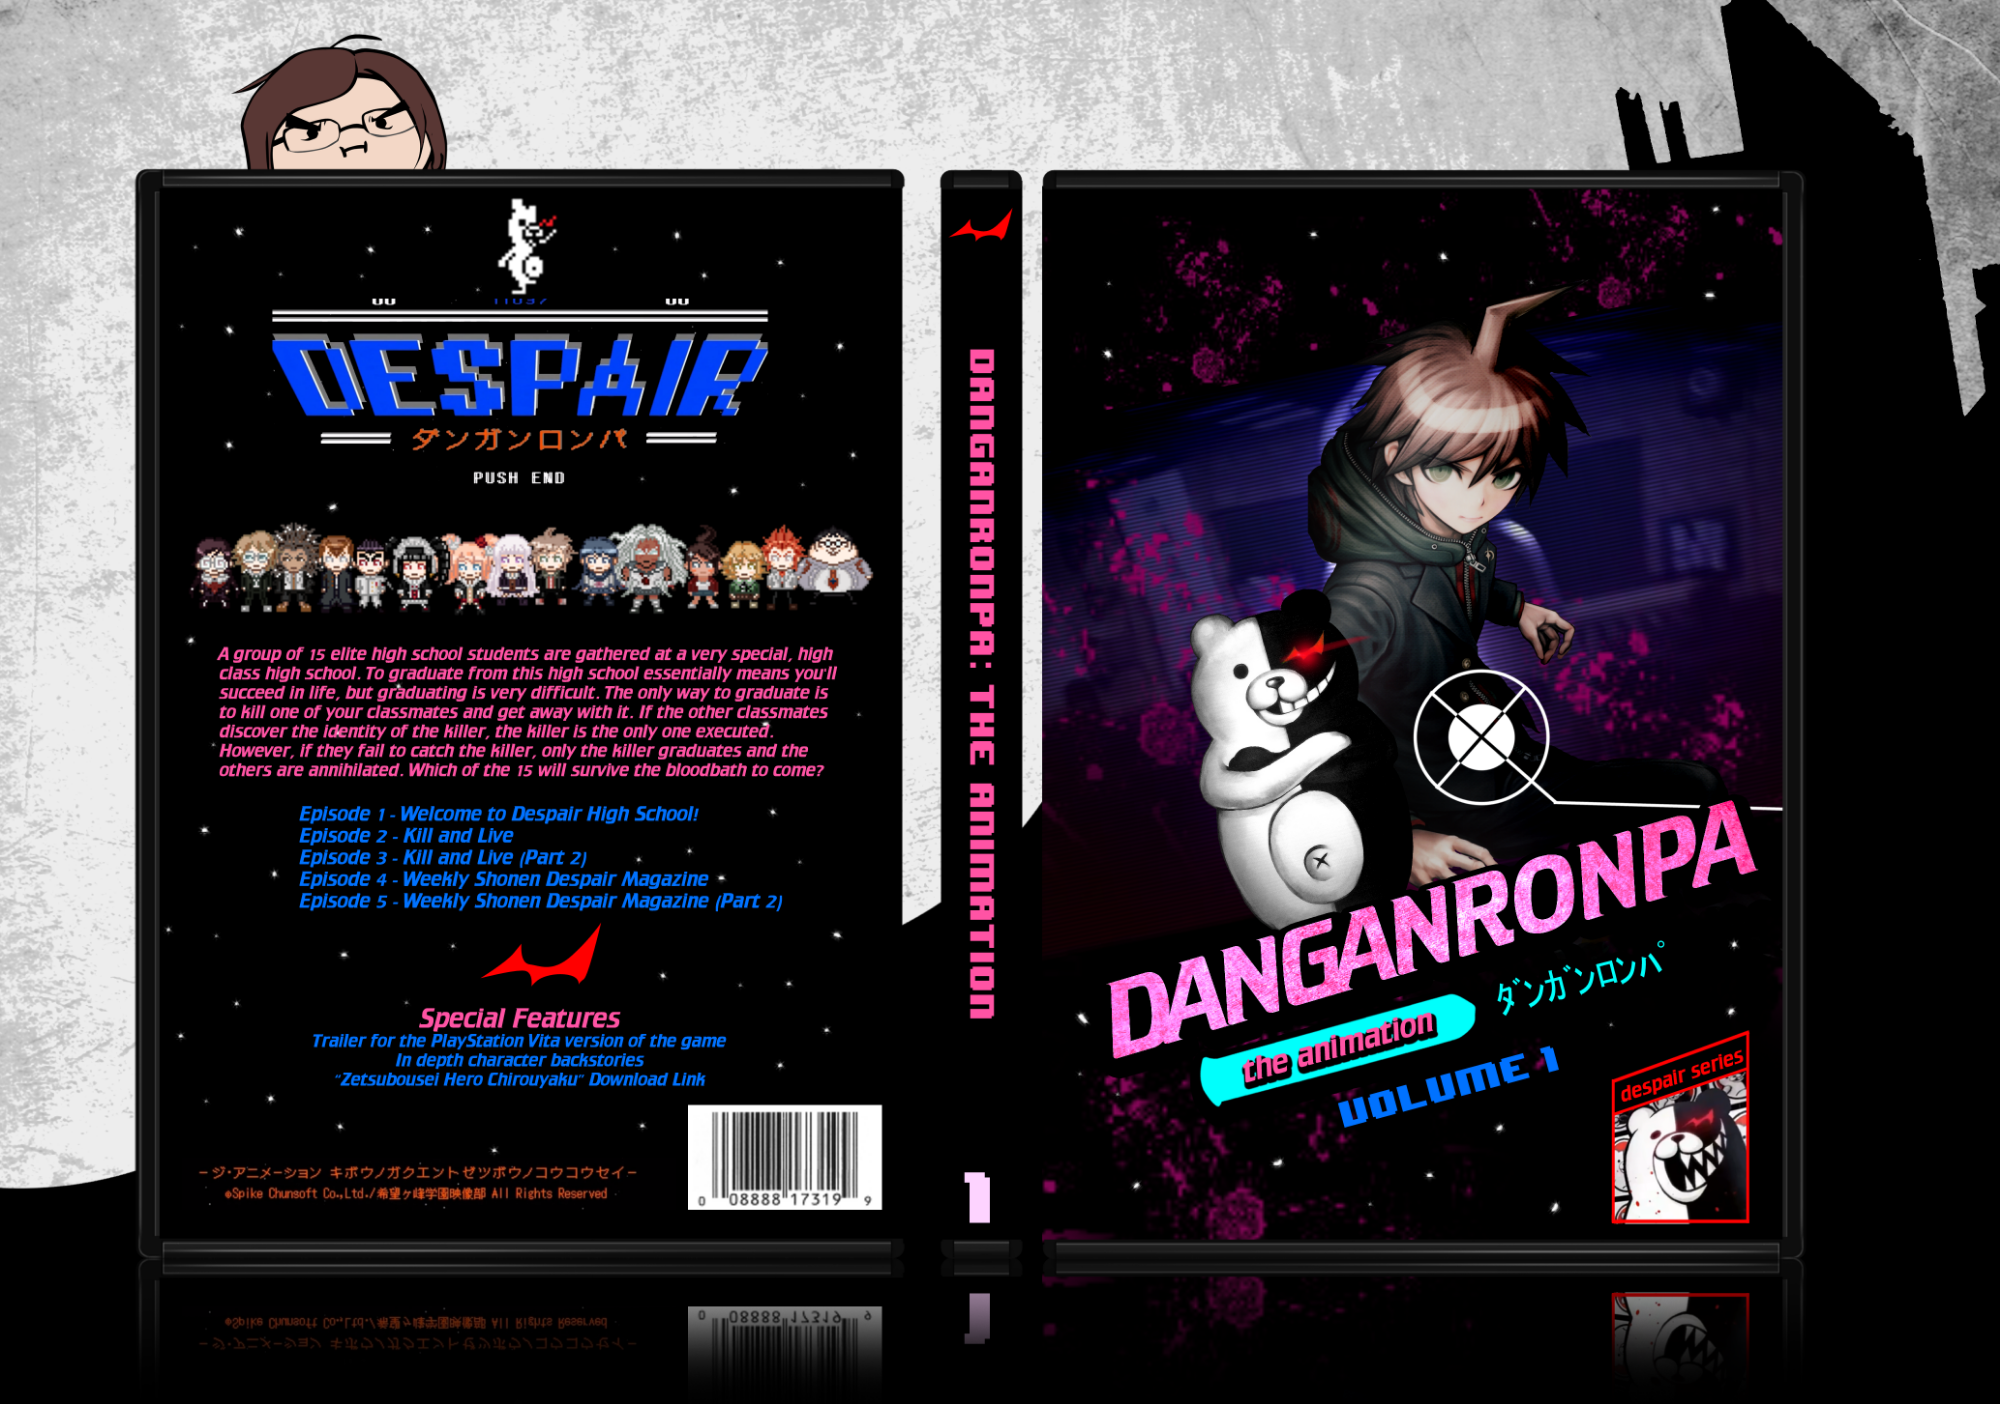 Danganronpa: The Animation box cover